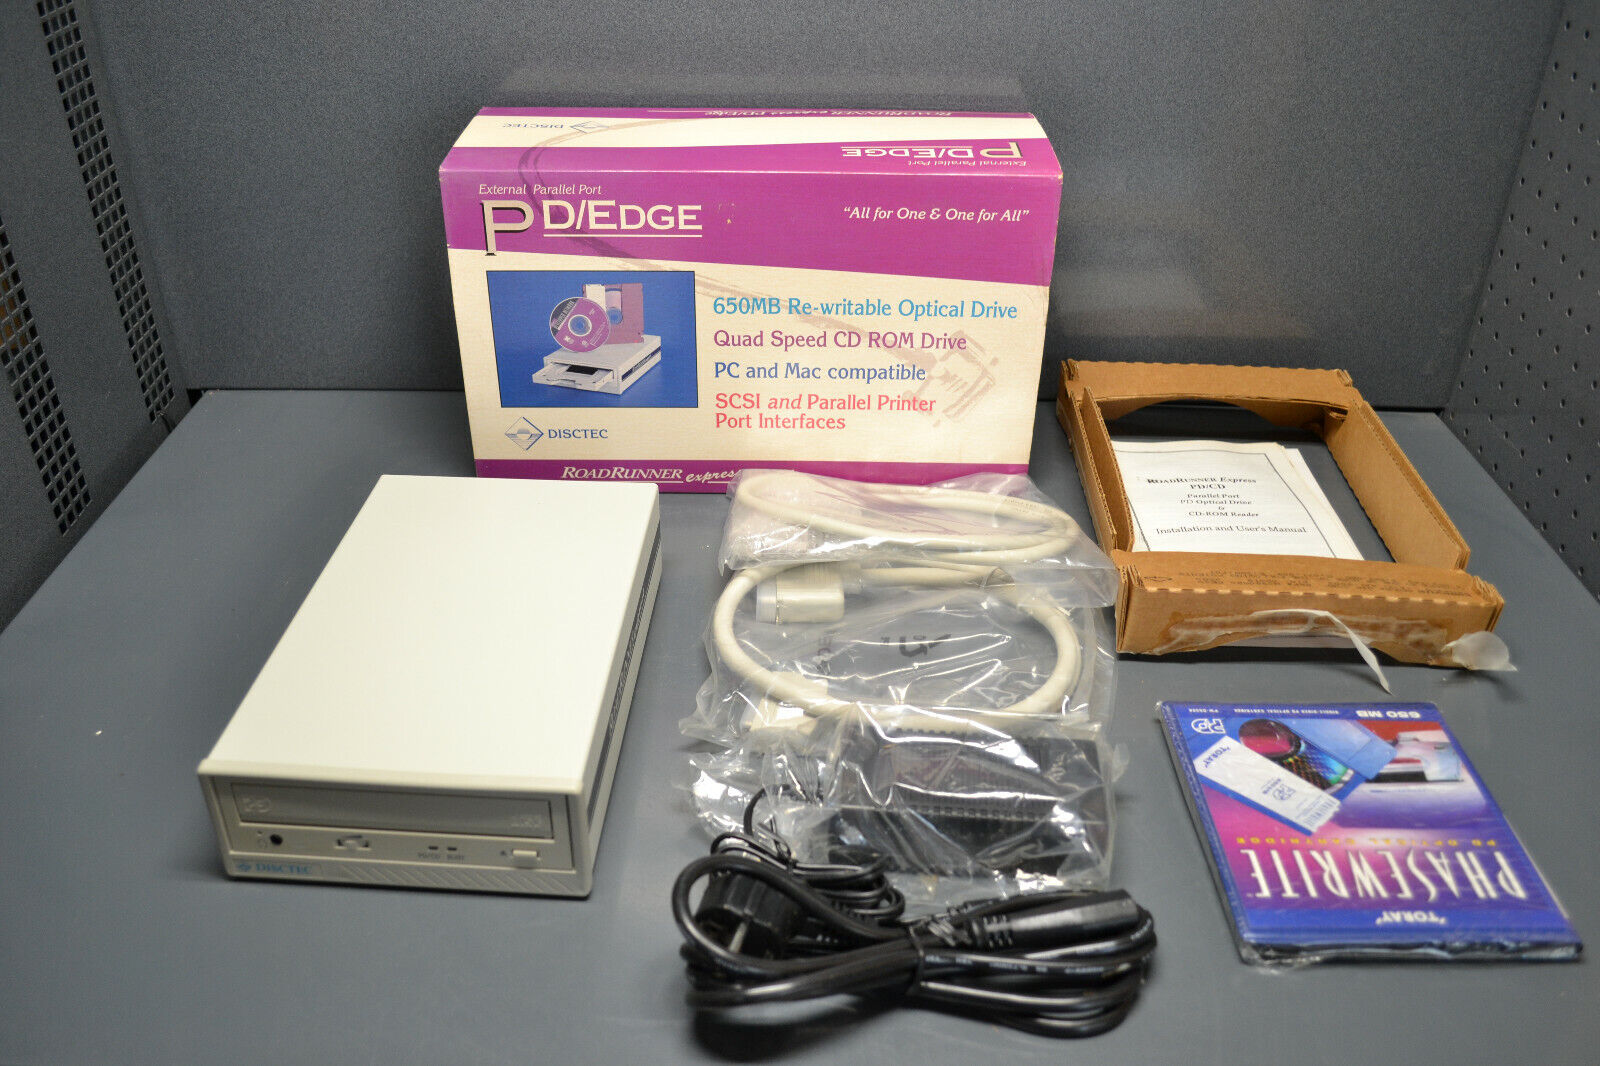 Brand new Vintage Disctec External PD/Edge SCSI / parallel optical drive 650mb